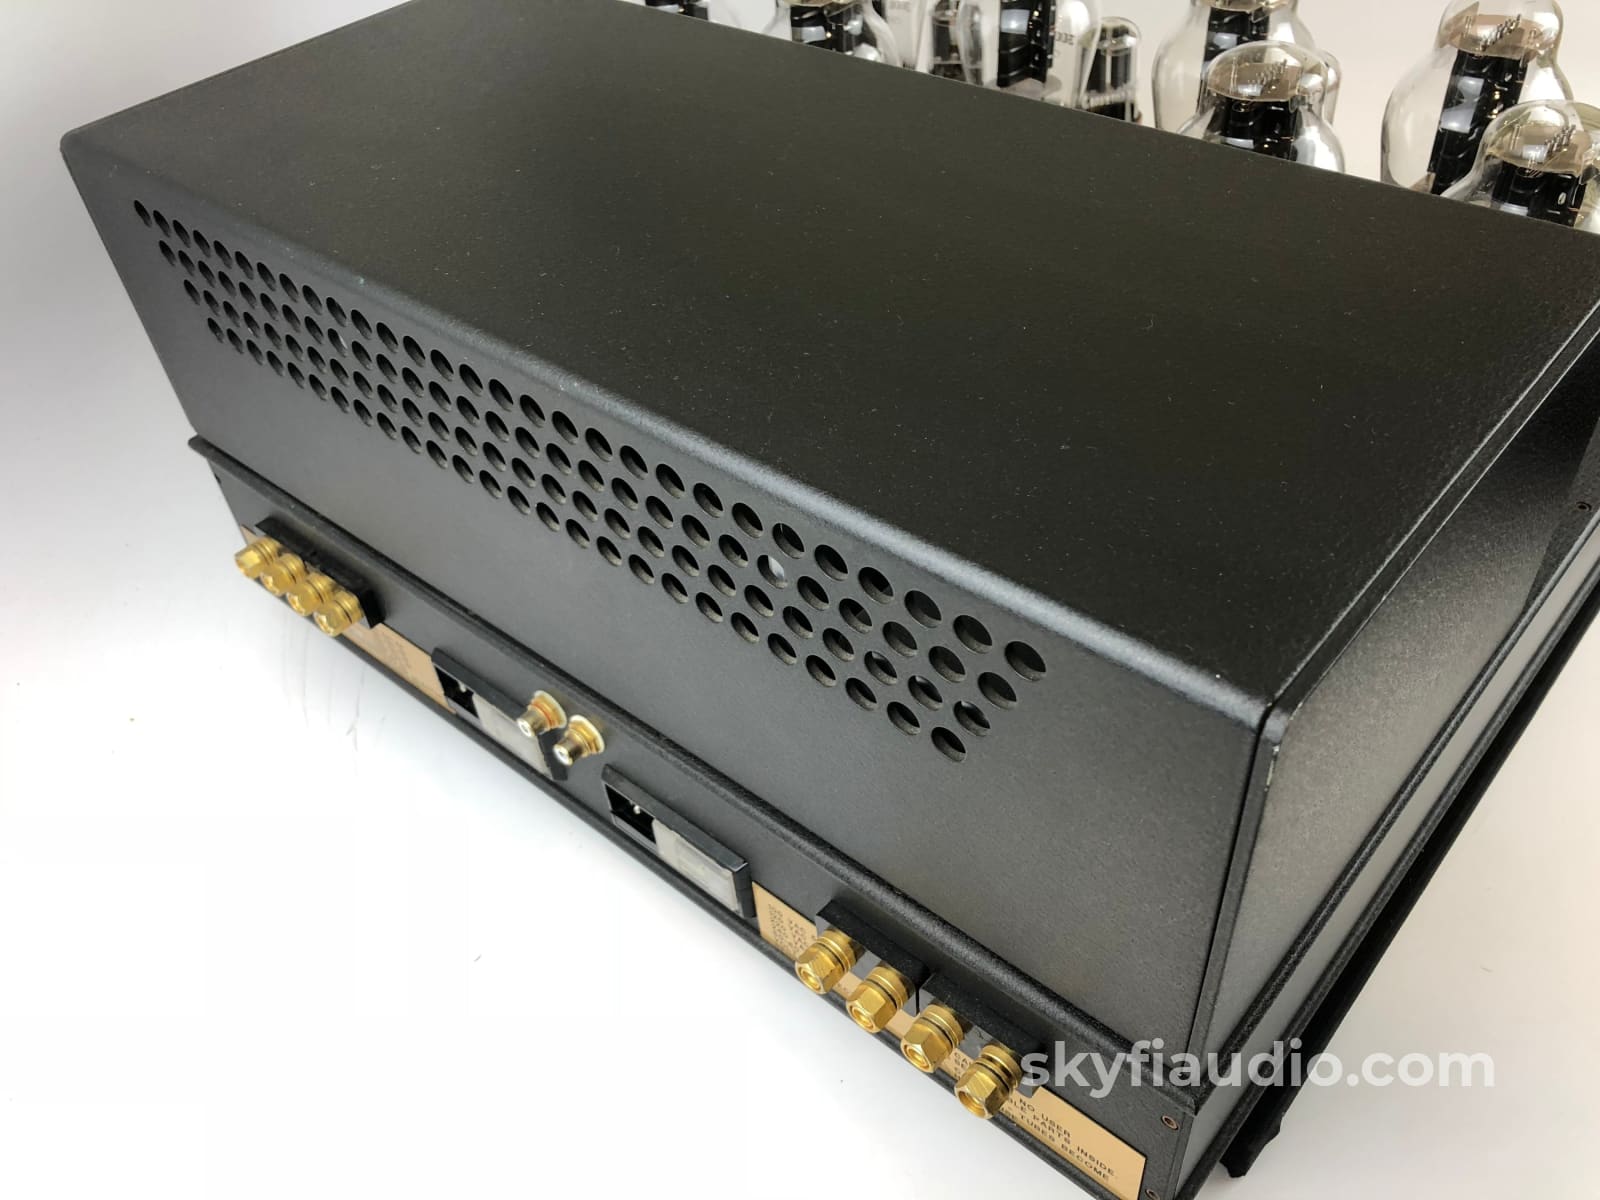 Vac (Valve Amplification Company) Renaissance Seventy/Seventy 70/70 Dual Mono Tube Amplifier